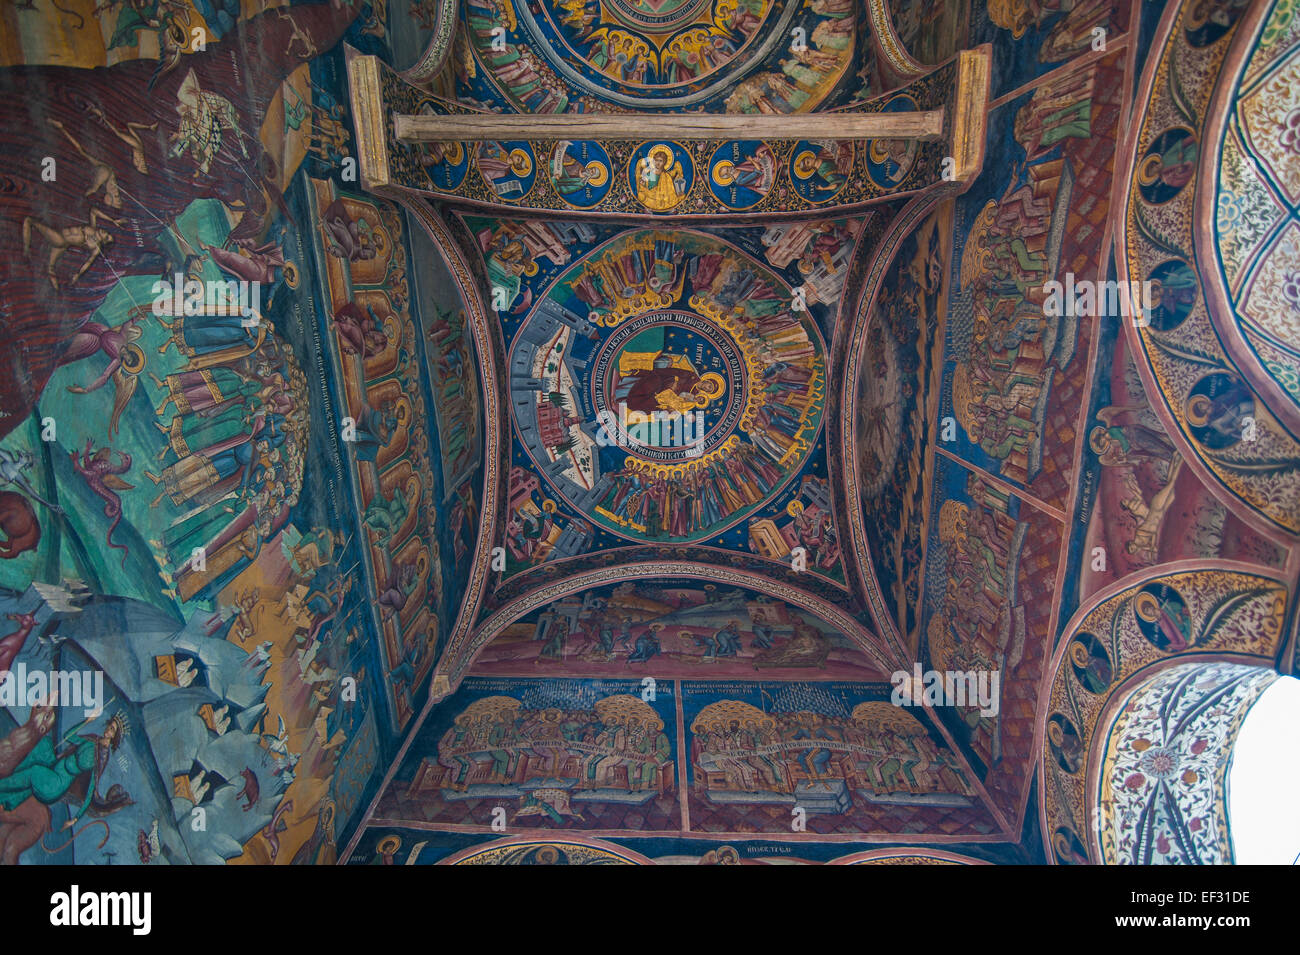 Christian pinturas murales, el monasterio de Horezu, Sitio del Patrimonio Mundial de la UNESCO, Horezu, Rumania Foto de stock